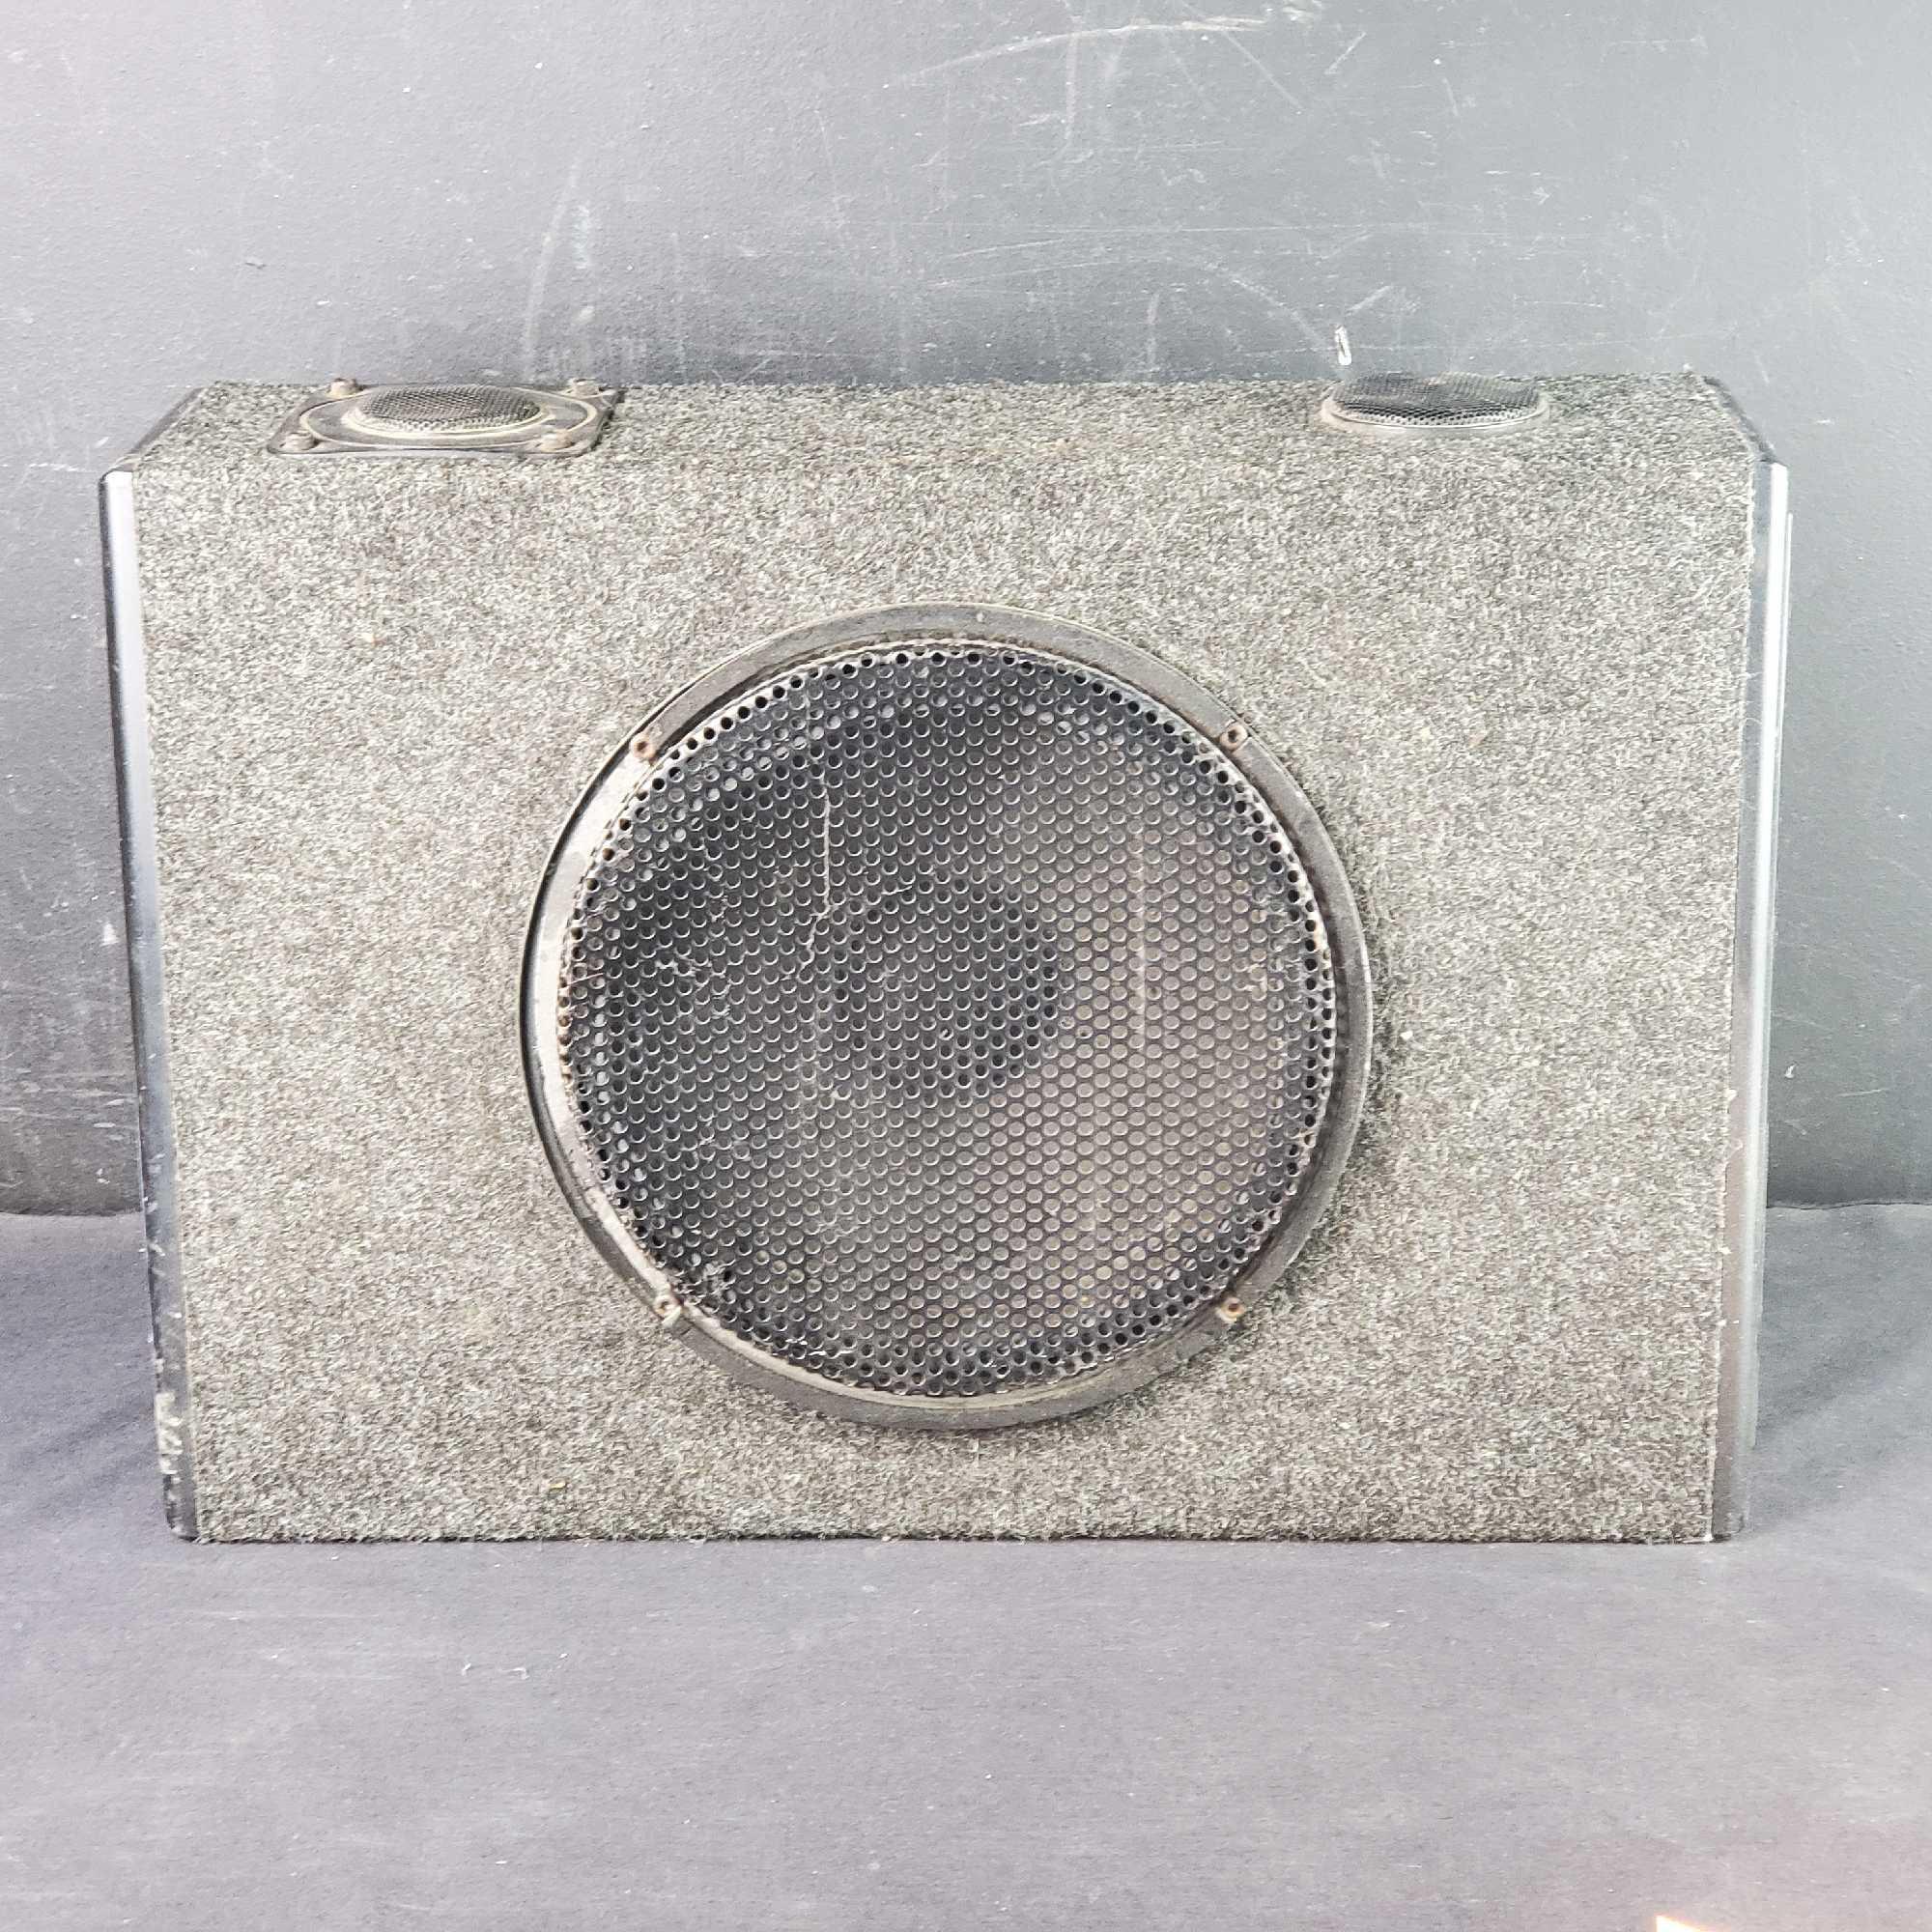 Kenwood KSC-9900 2 way speaker system